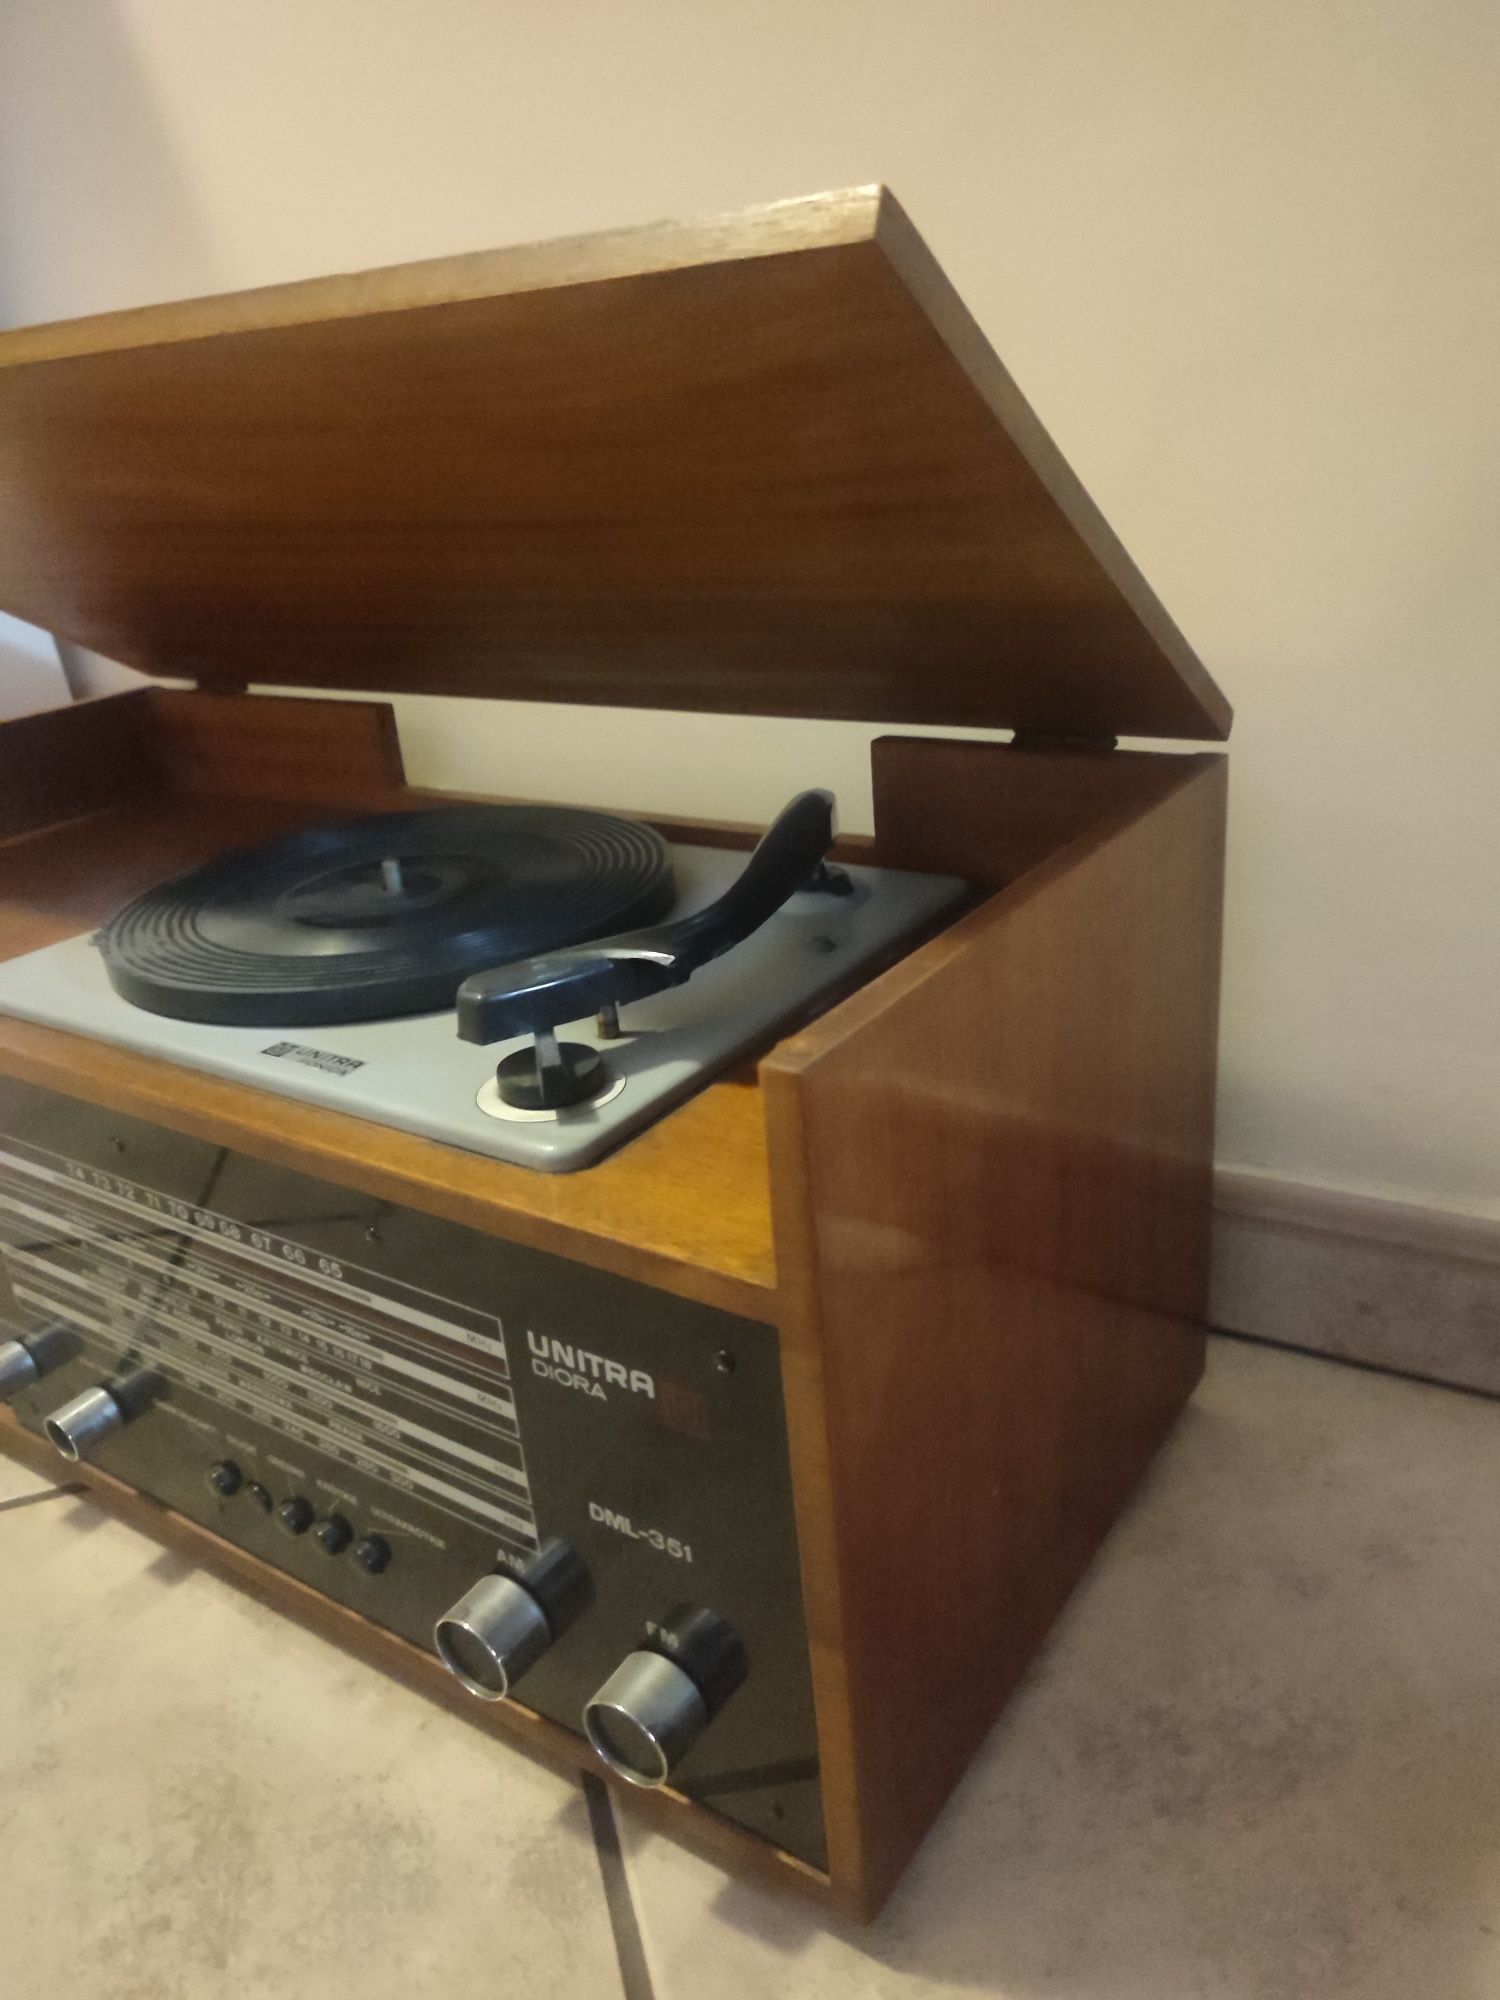 Radio UNITRA  vintage